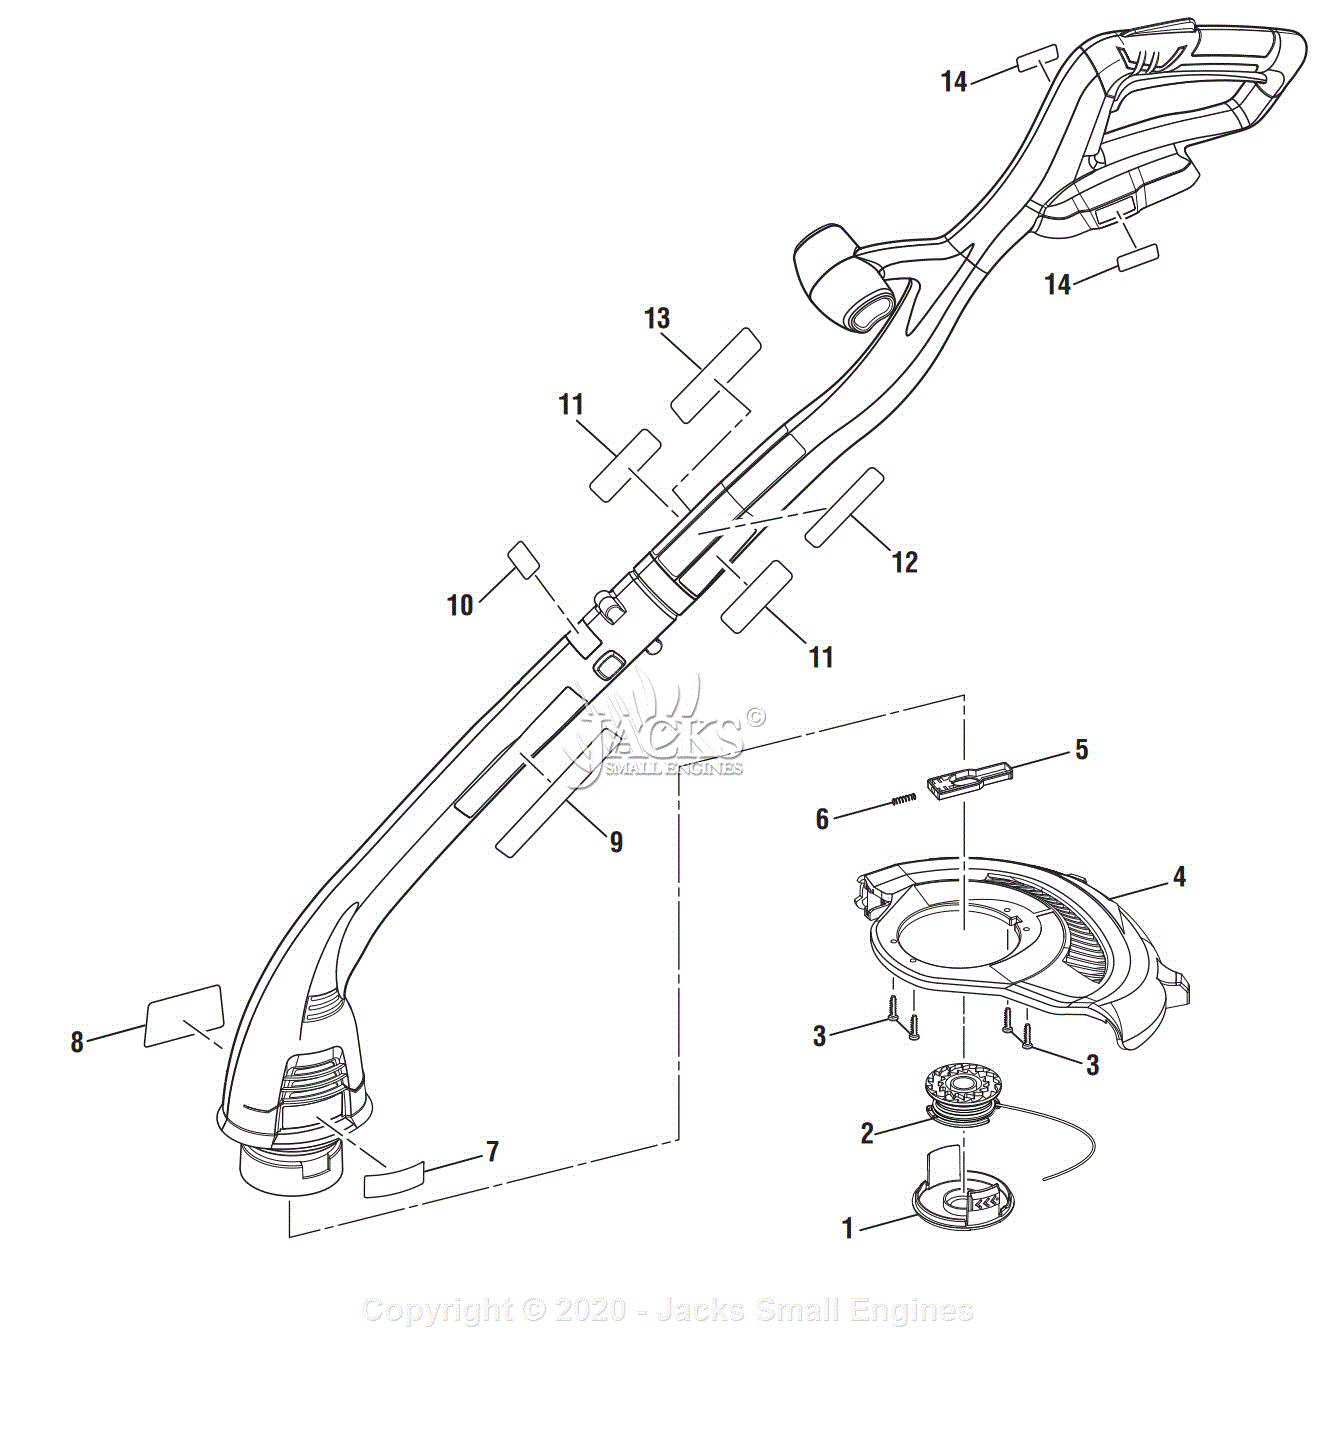 P2003 Parts Diagram for Parts Schematic